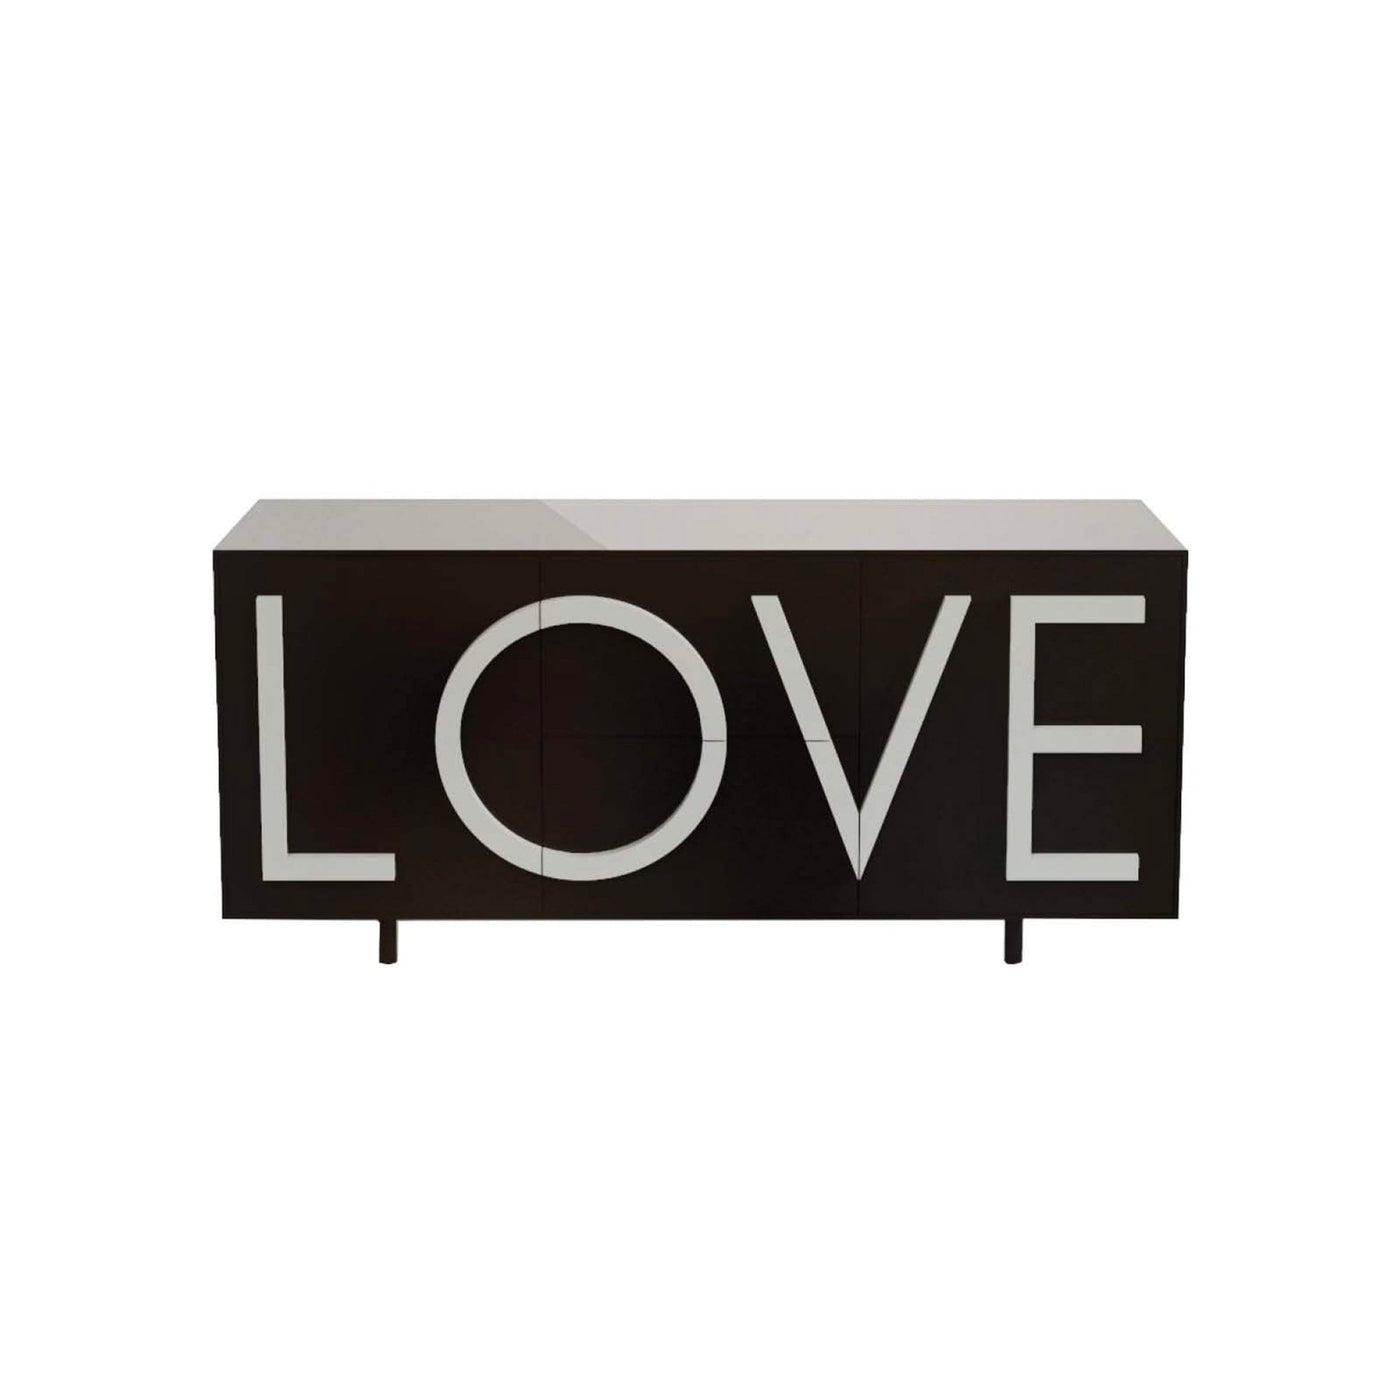 Sideboard LOVE BLACK by Fabio Novembre for Driade 01